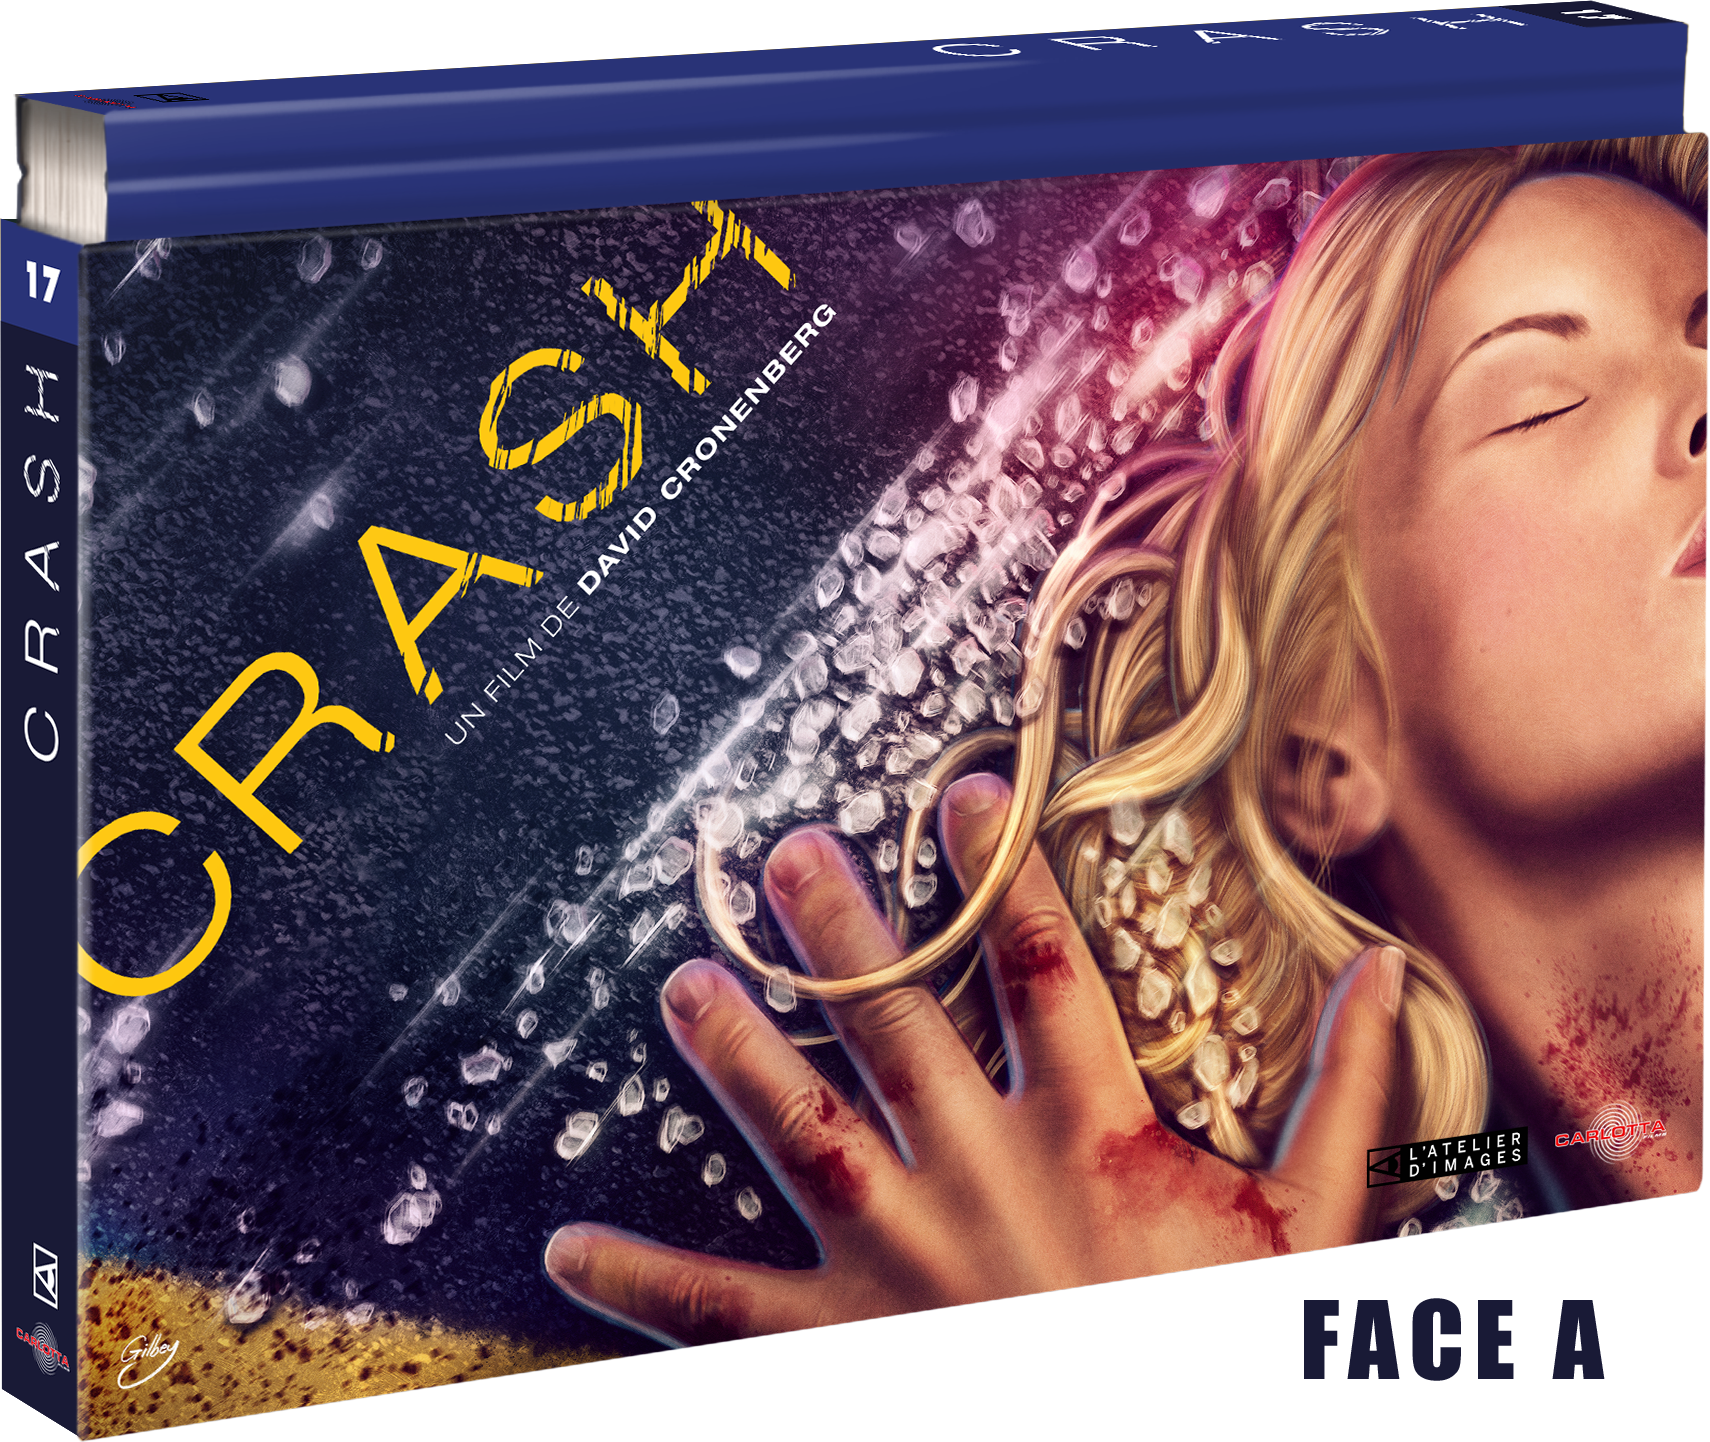 Crash - Ultra Collector Box 17 - 4K Ultra HD + Blu-ray + DVD + Book